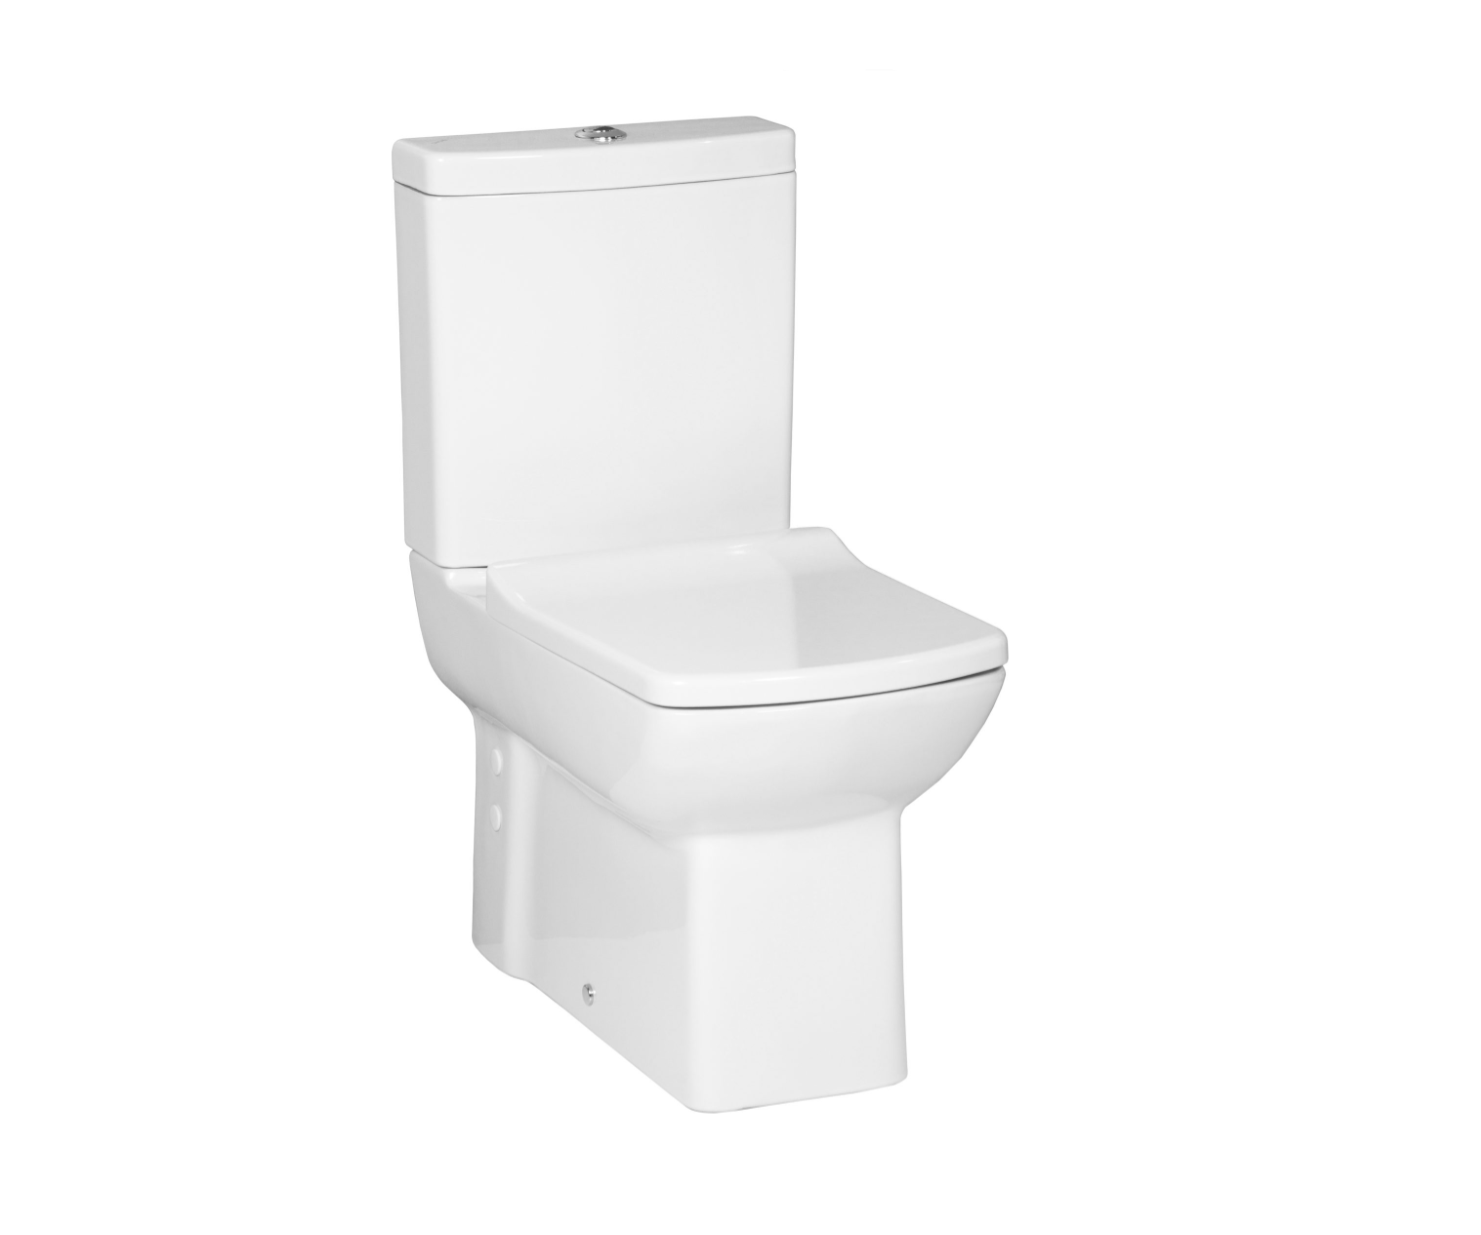 staand-toilet-creavit-lara-wit-compleet-incl-toile